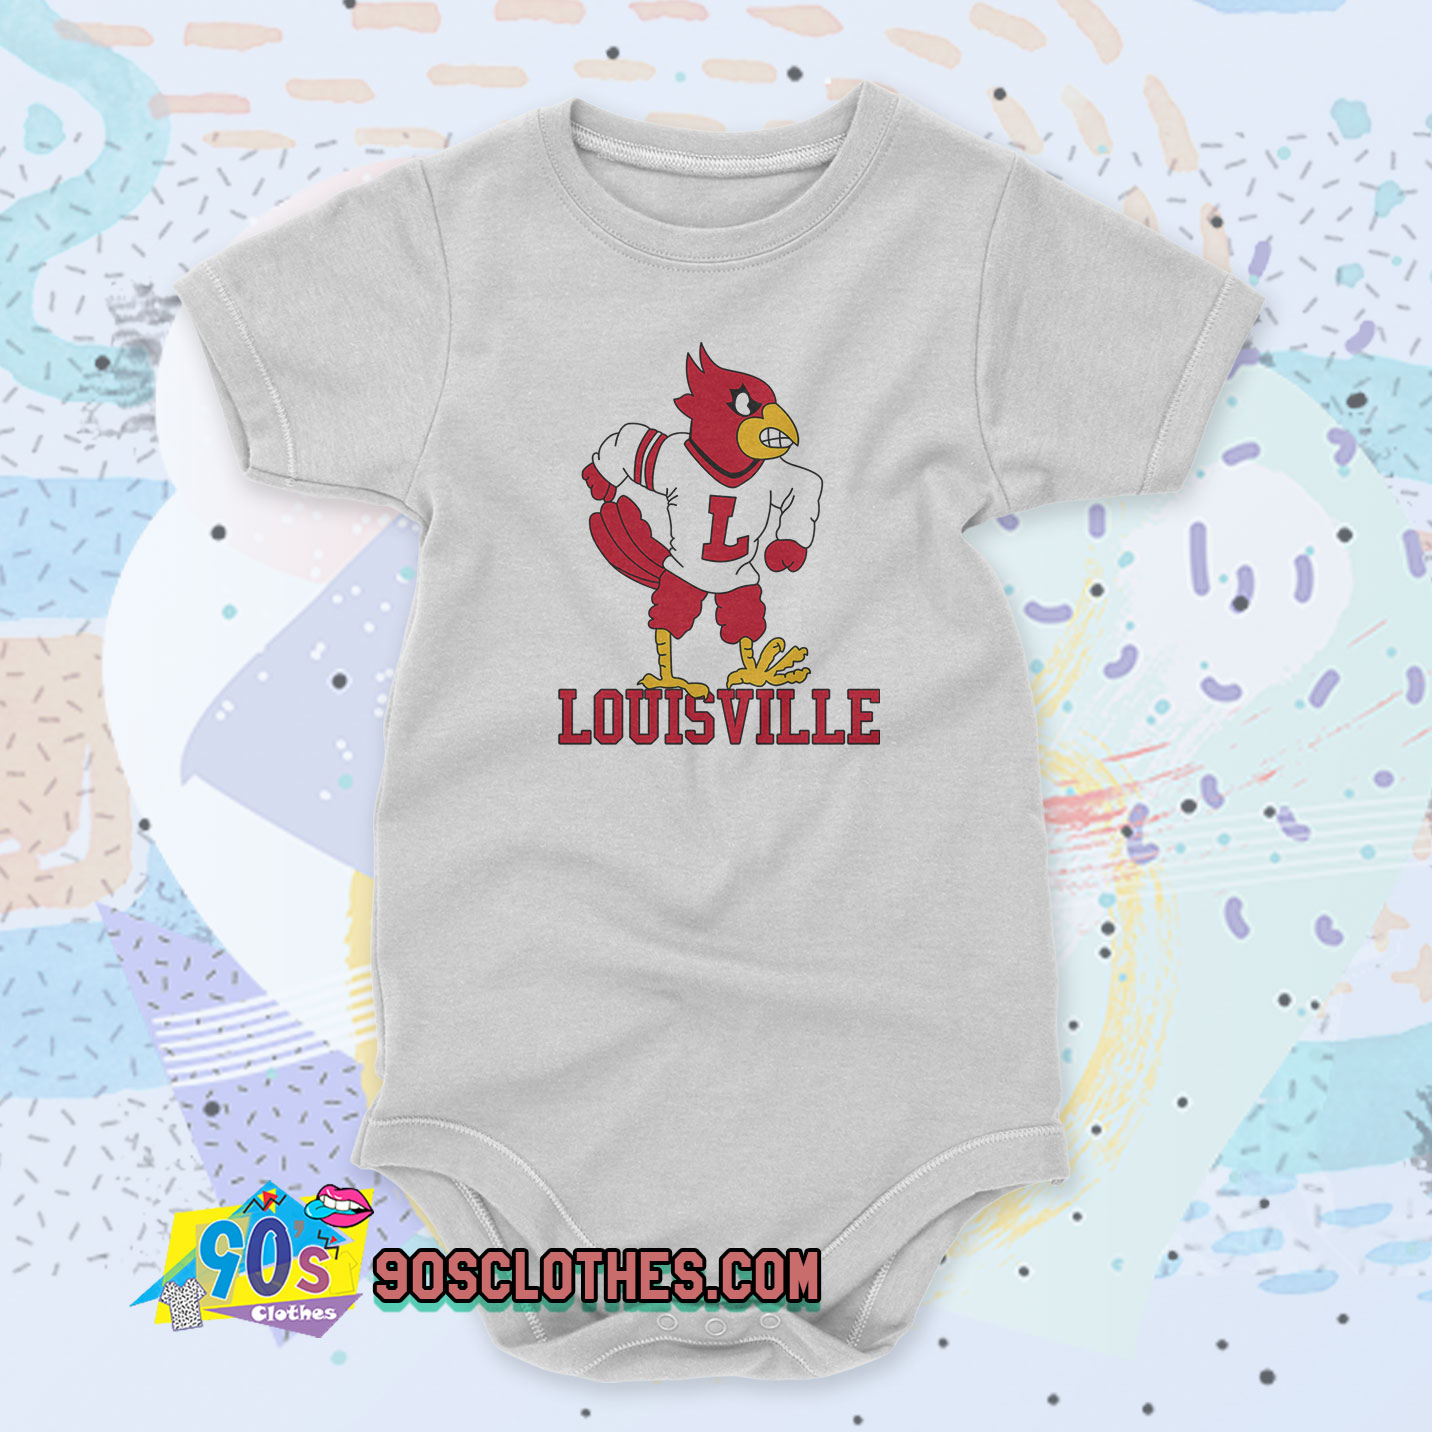 louisville cardinals Vintage Baby Onesie, Baby Clothes